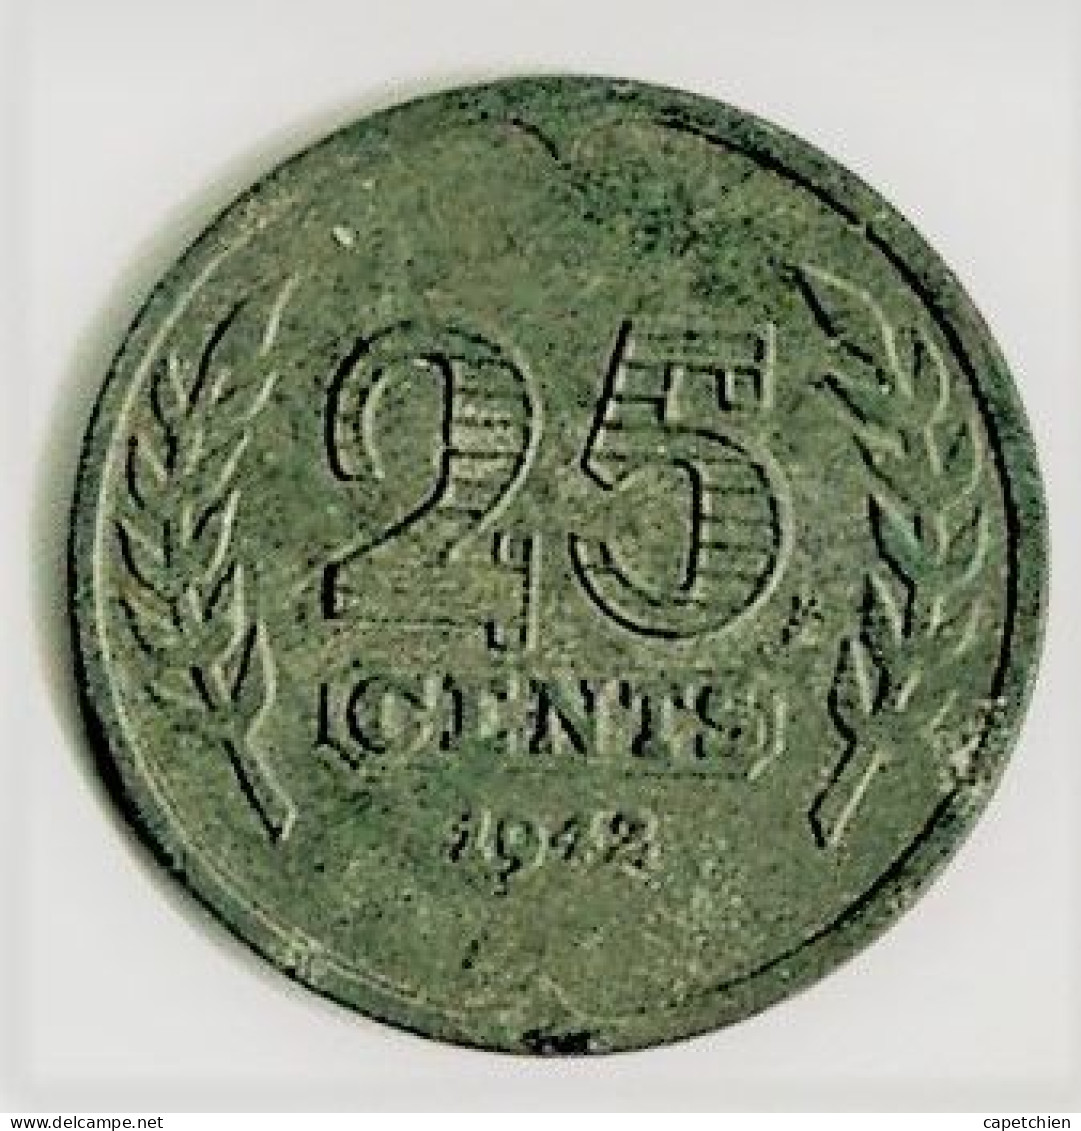 PAYS-BAS / 25 CENTS /1942 / ZINC - 5 Centavos